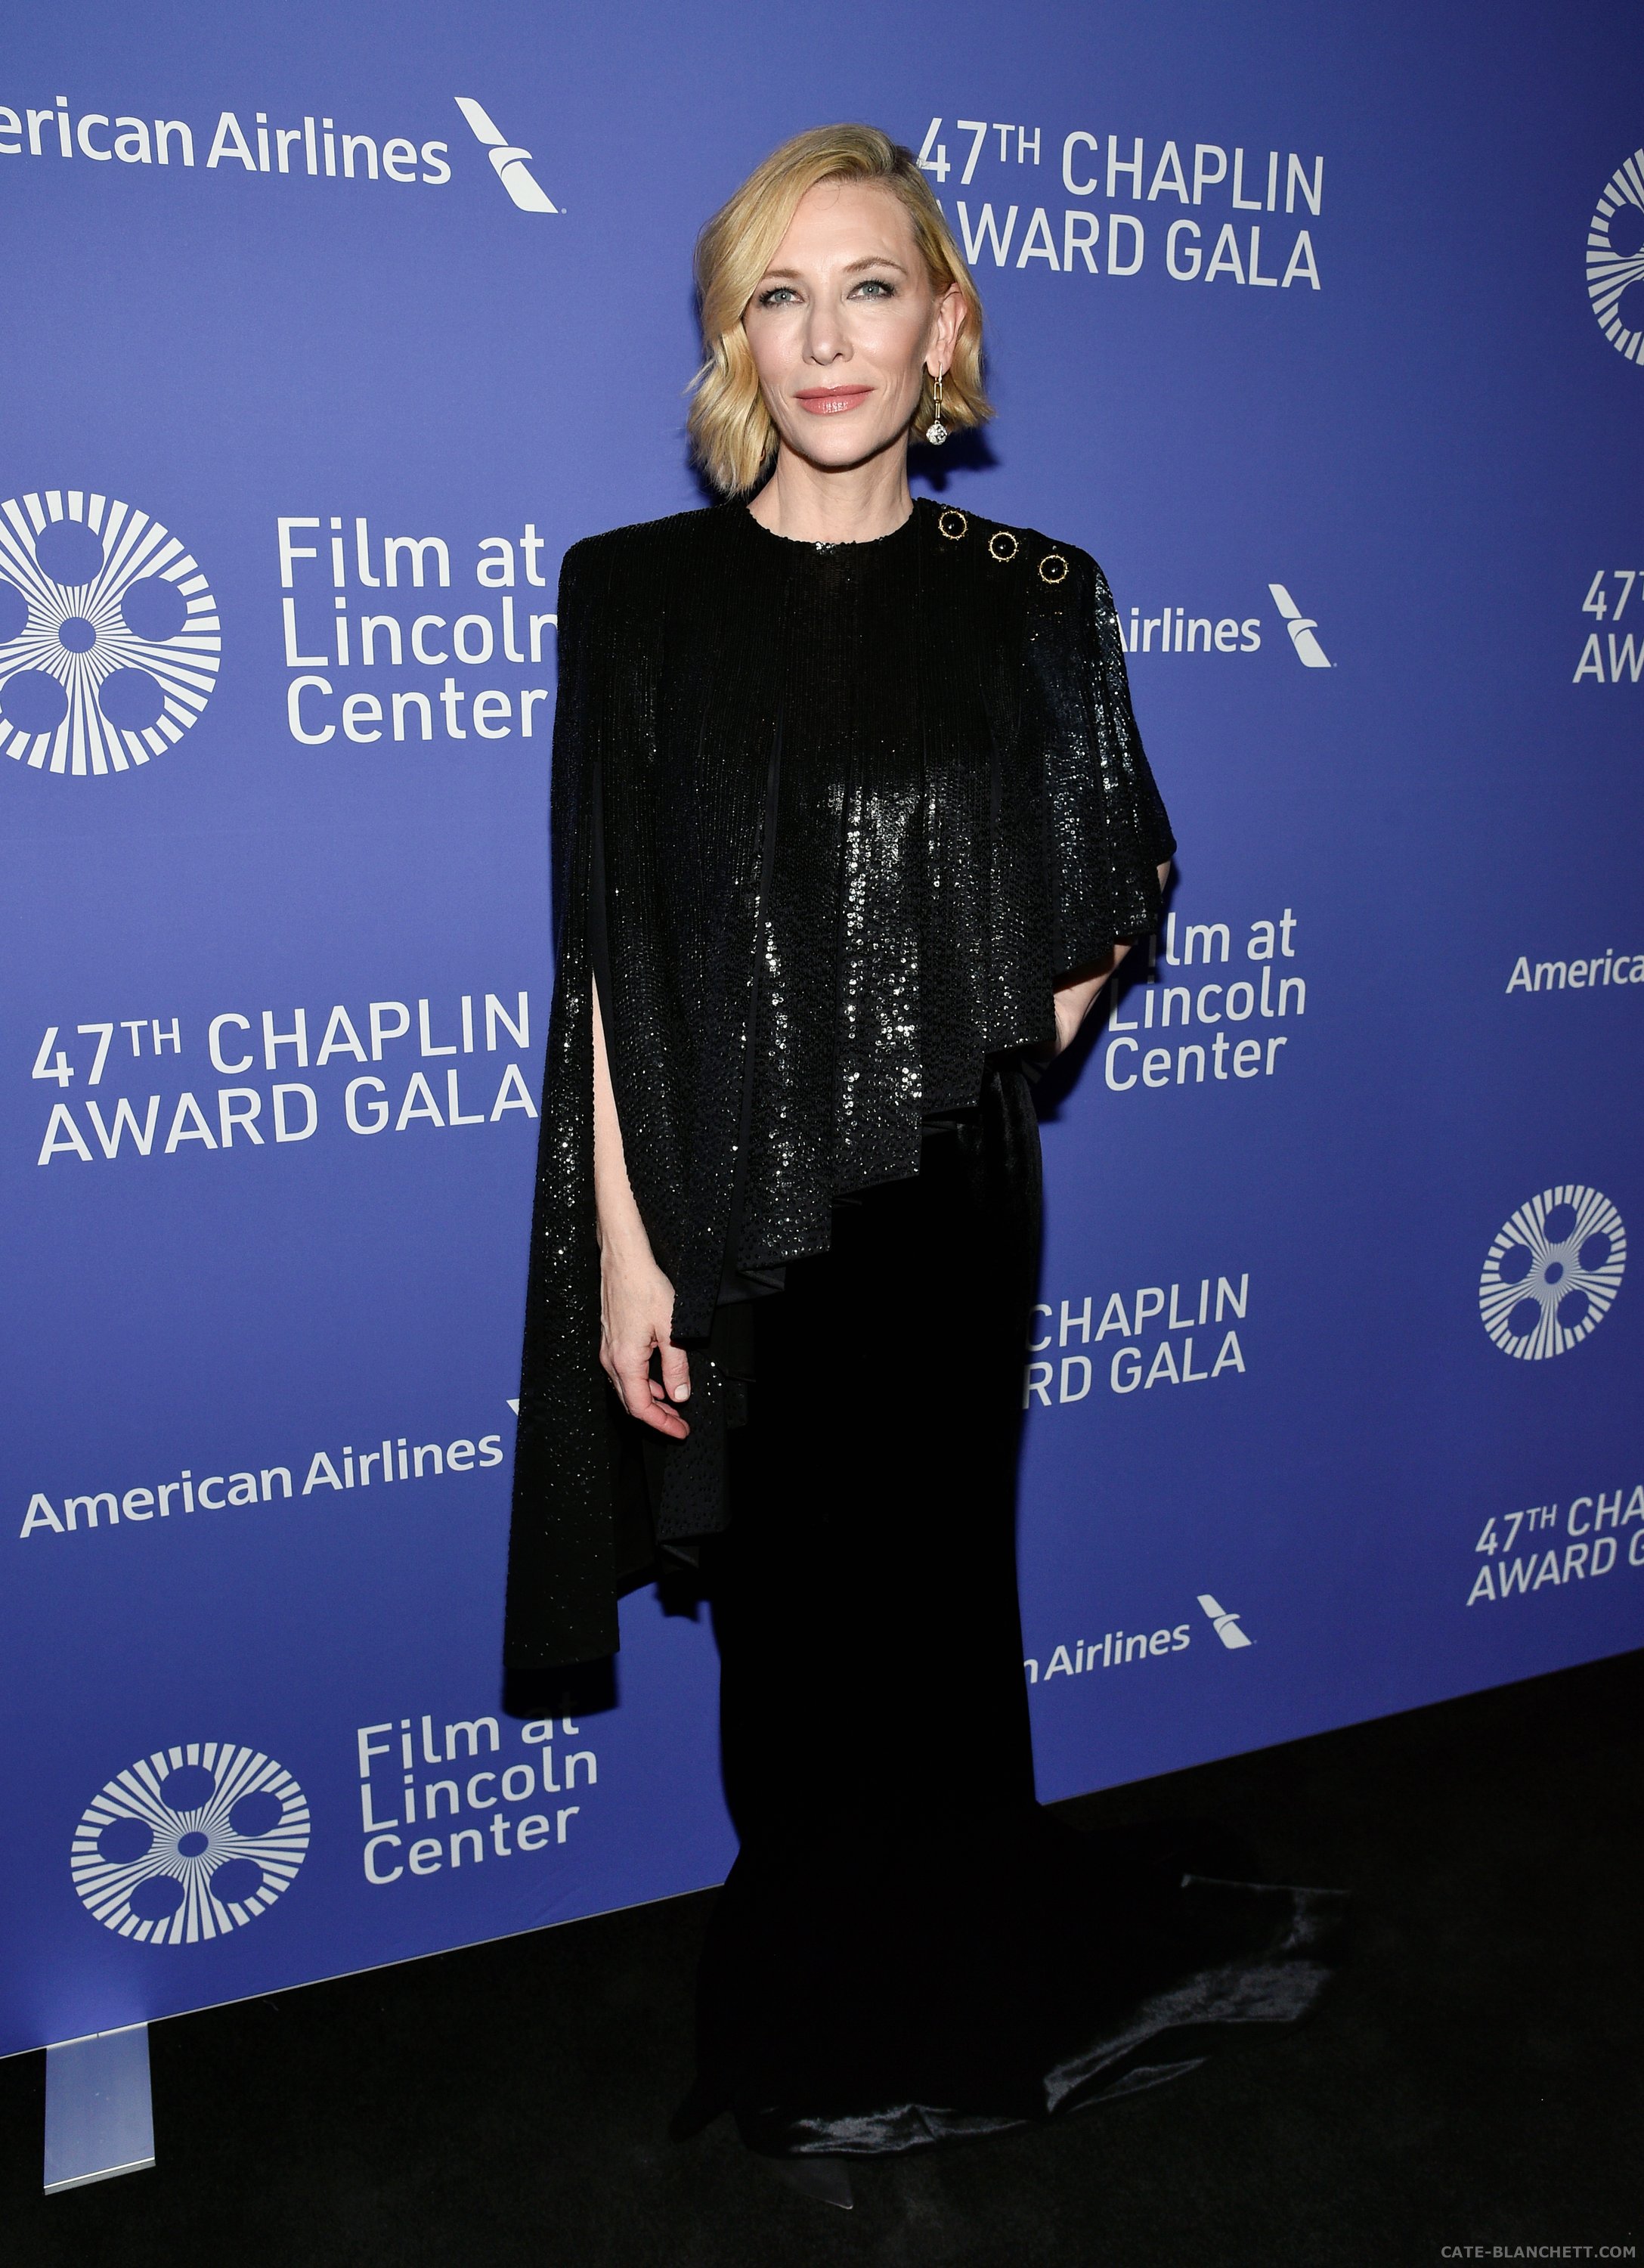 Slideshow - Cate Blanchett Fan | Cate Blanchett Gallery